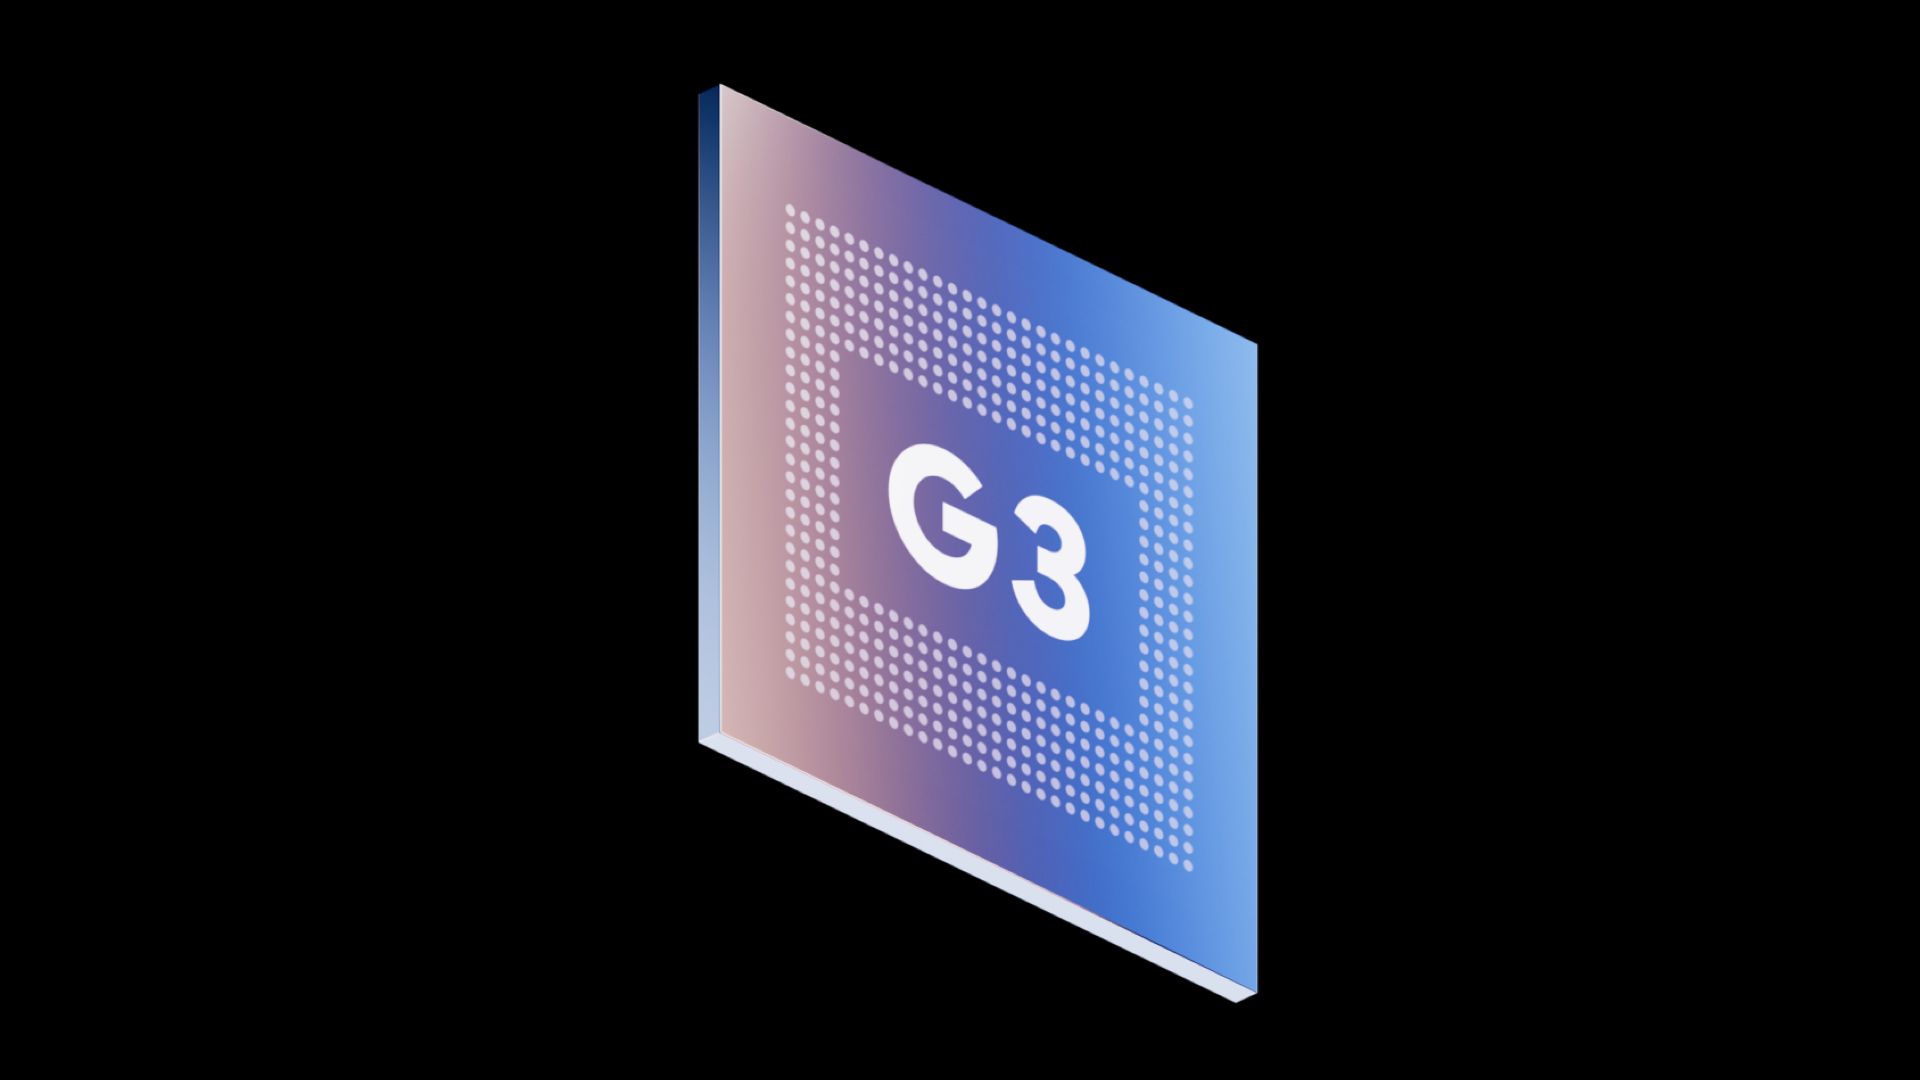 Tensor G3 official image